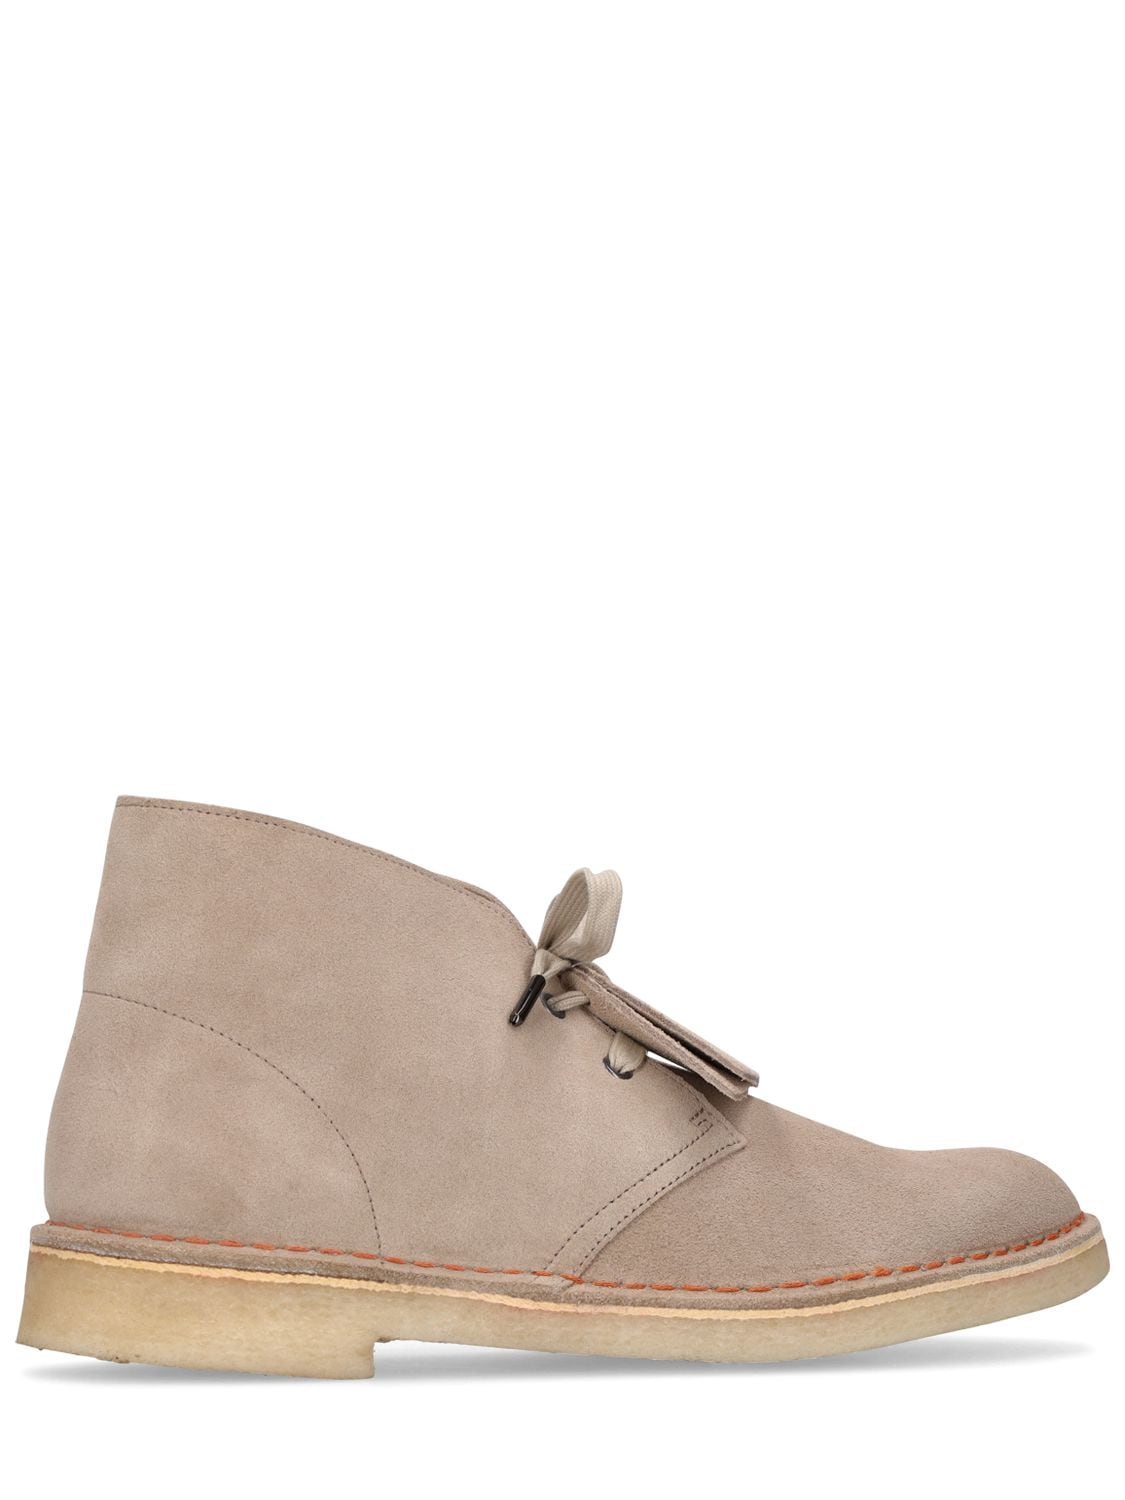 Clarks Originals Leather Desert Lace-up Shoes Suede Sand | ModeSens